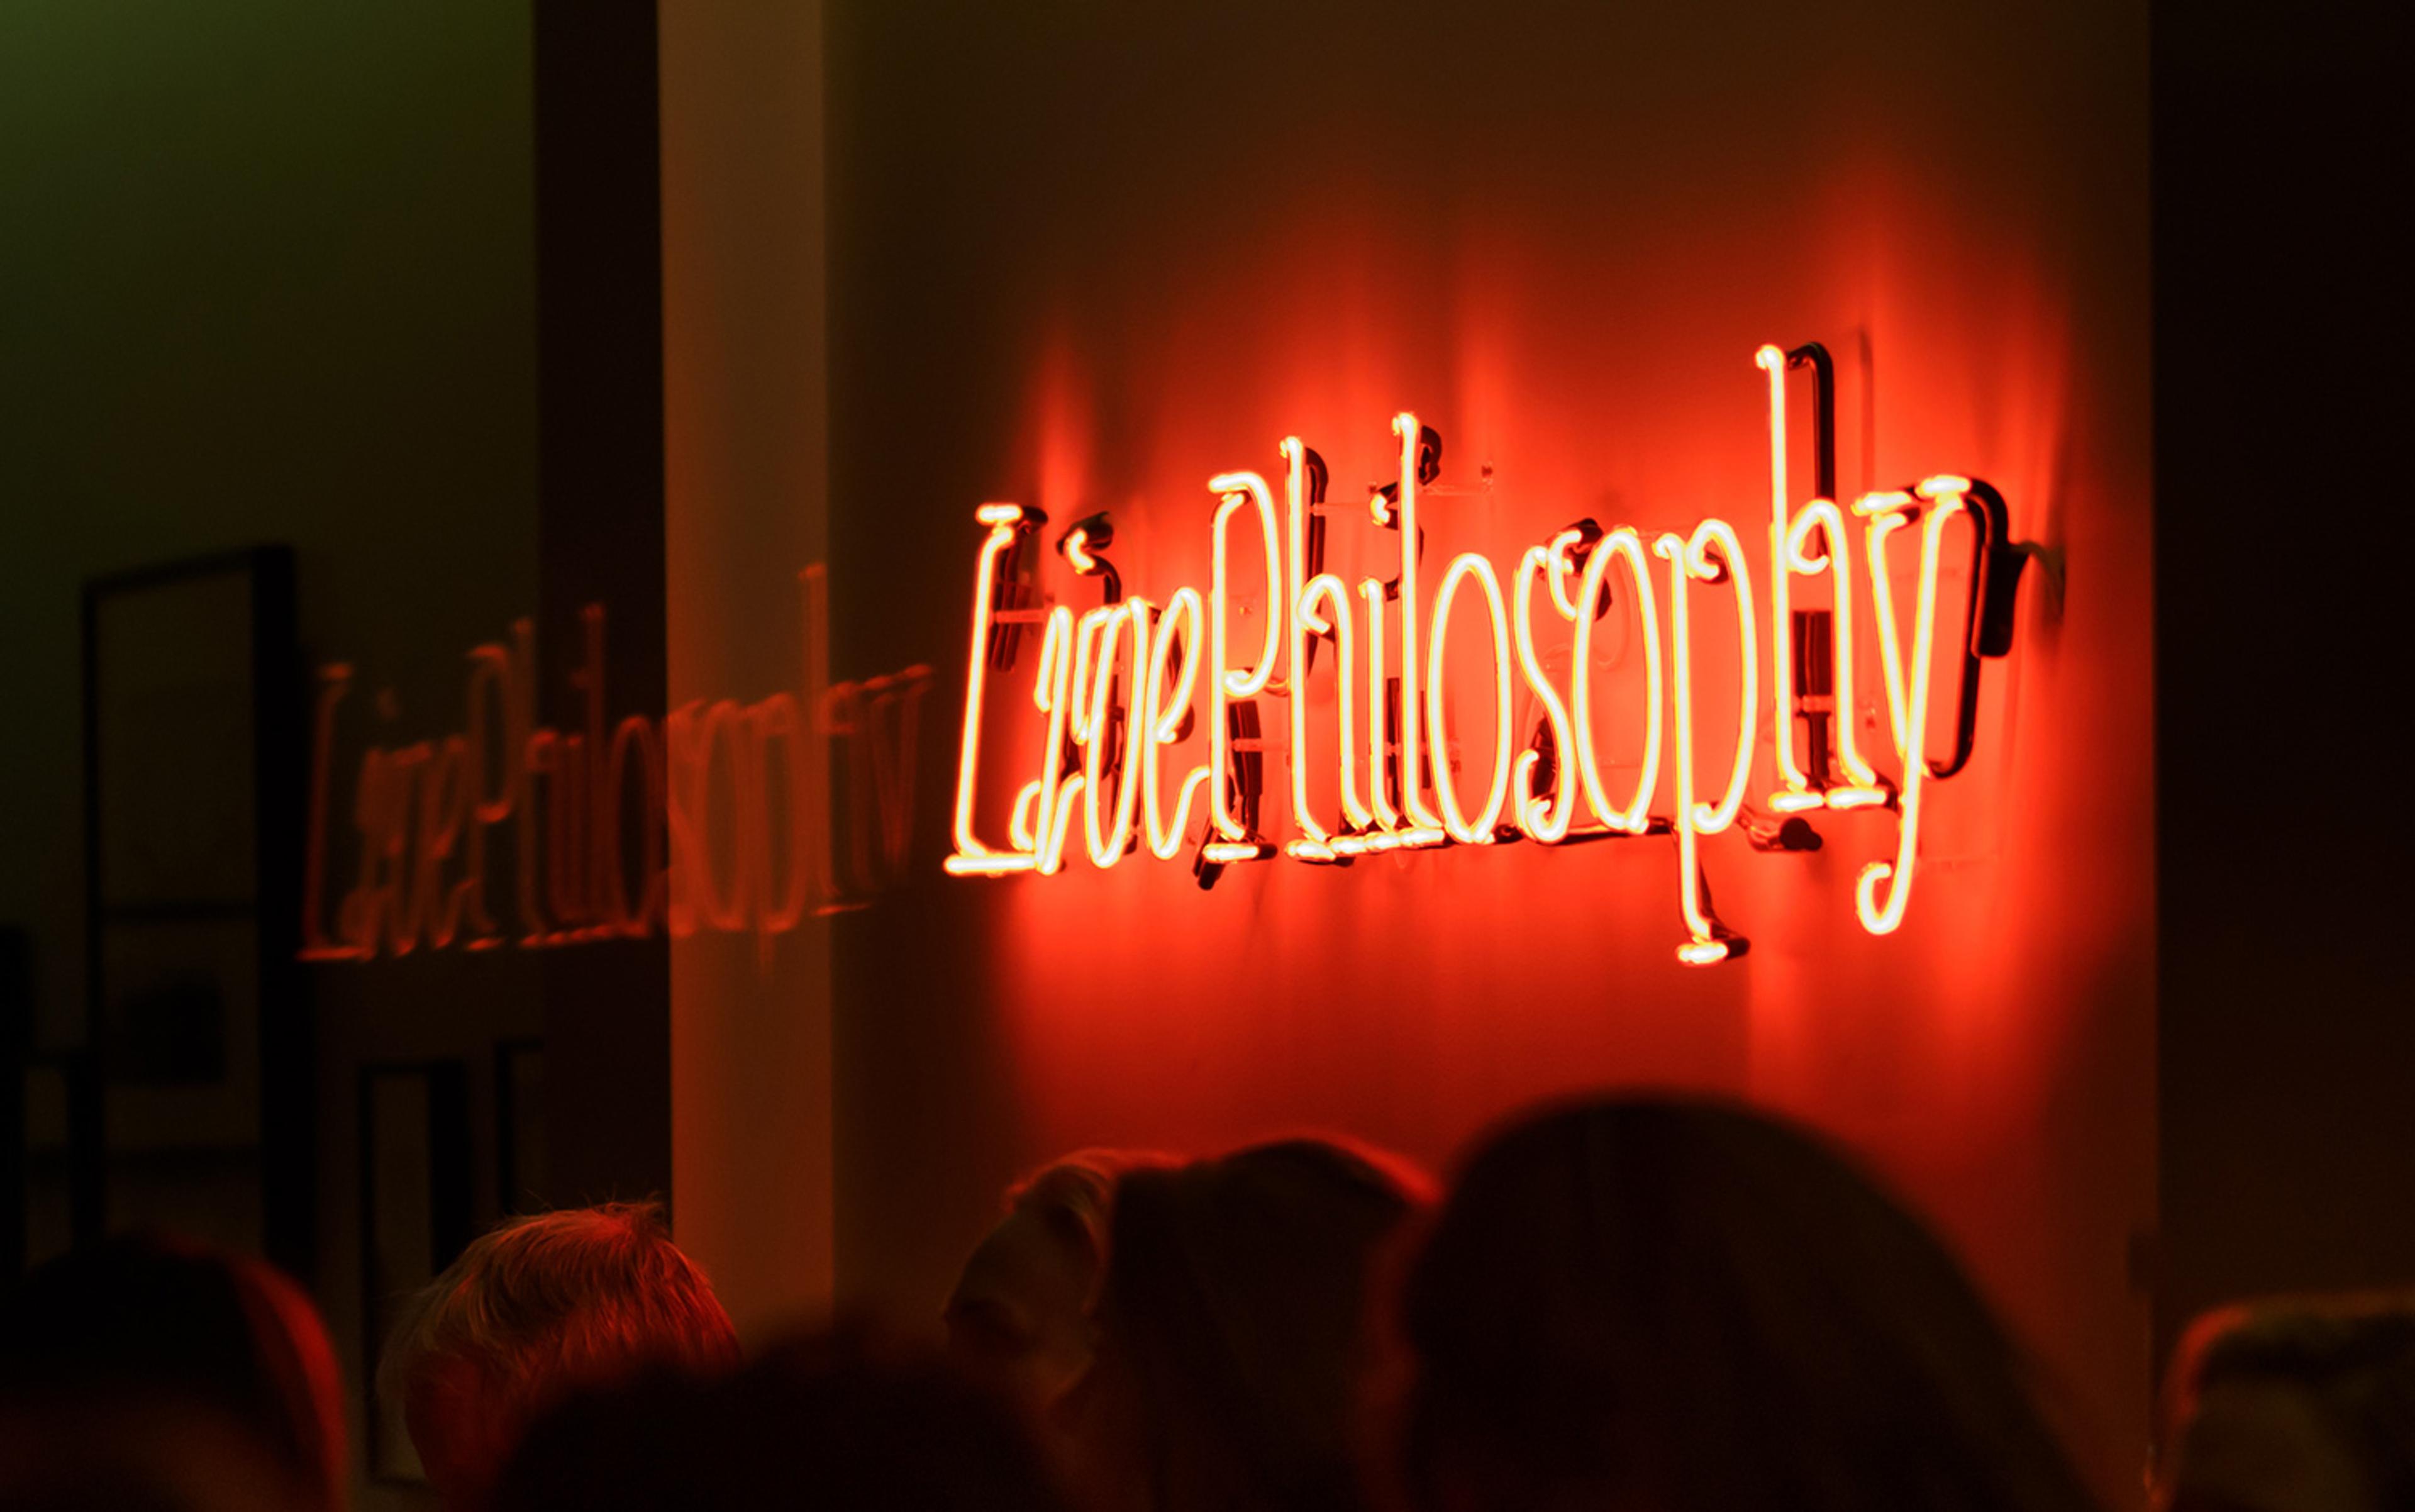 Live philosophy neon sign